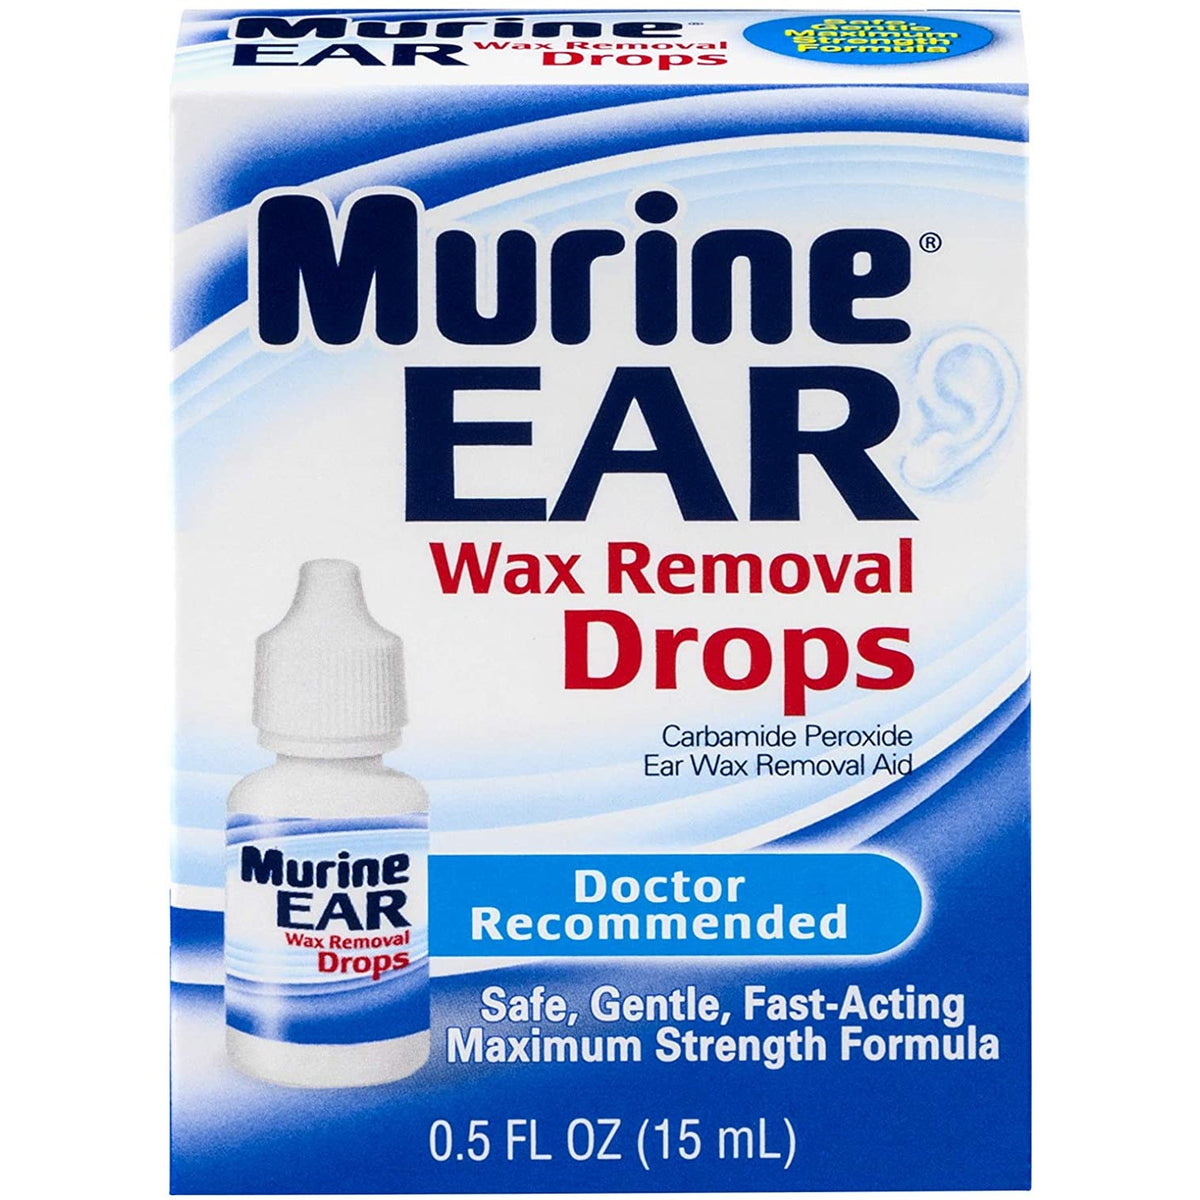 Earwax Removal Kit (liquid) Cardinal Health